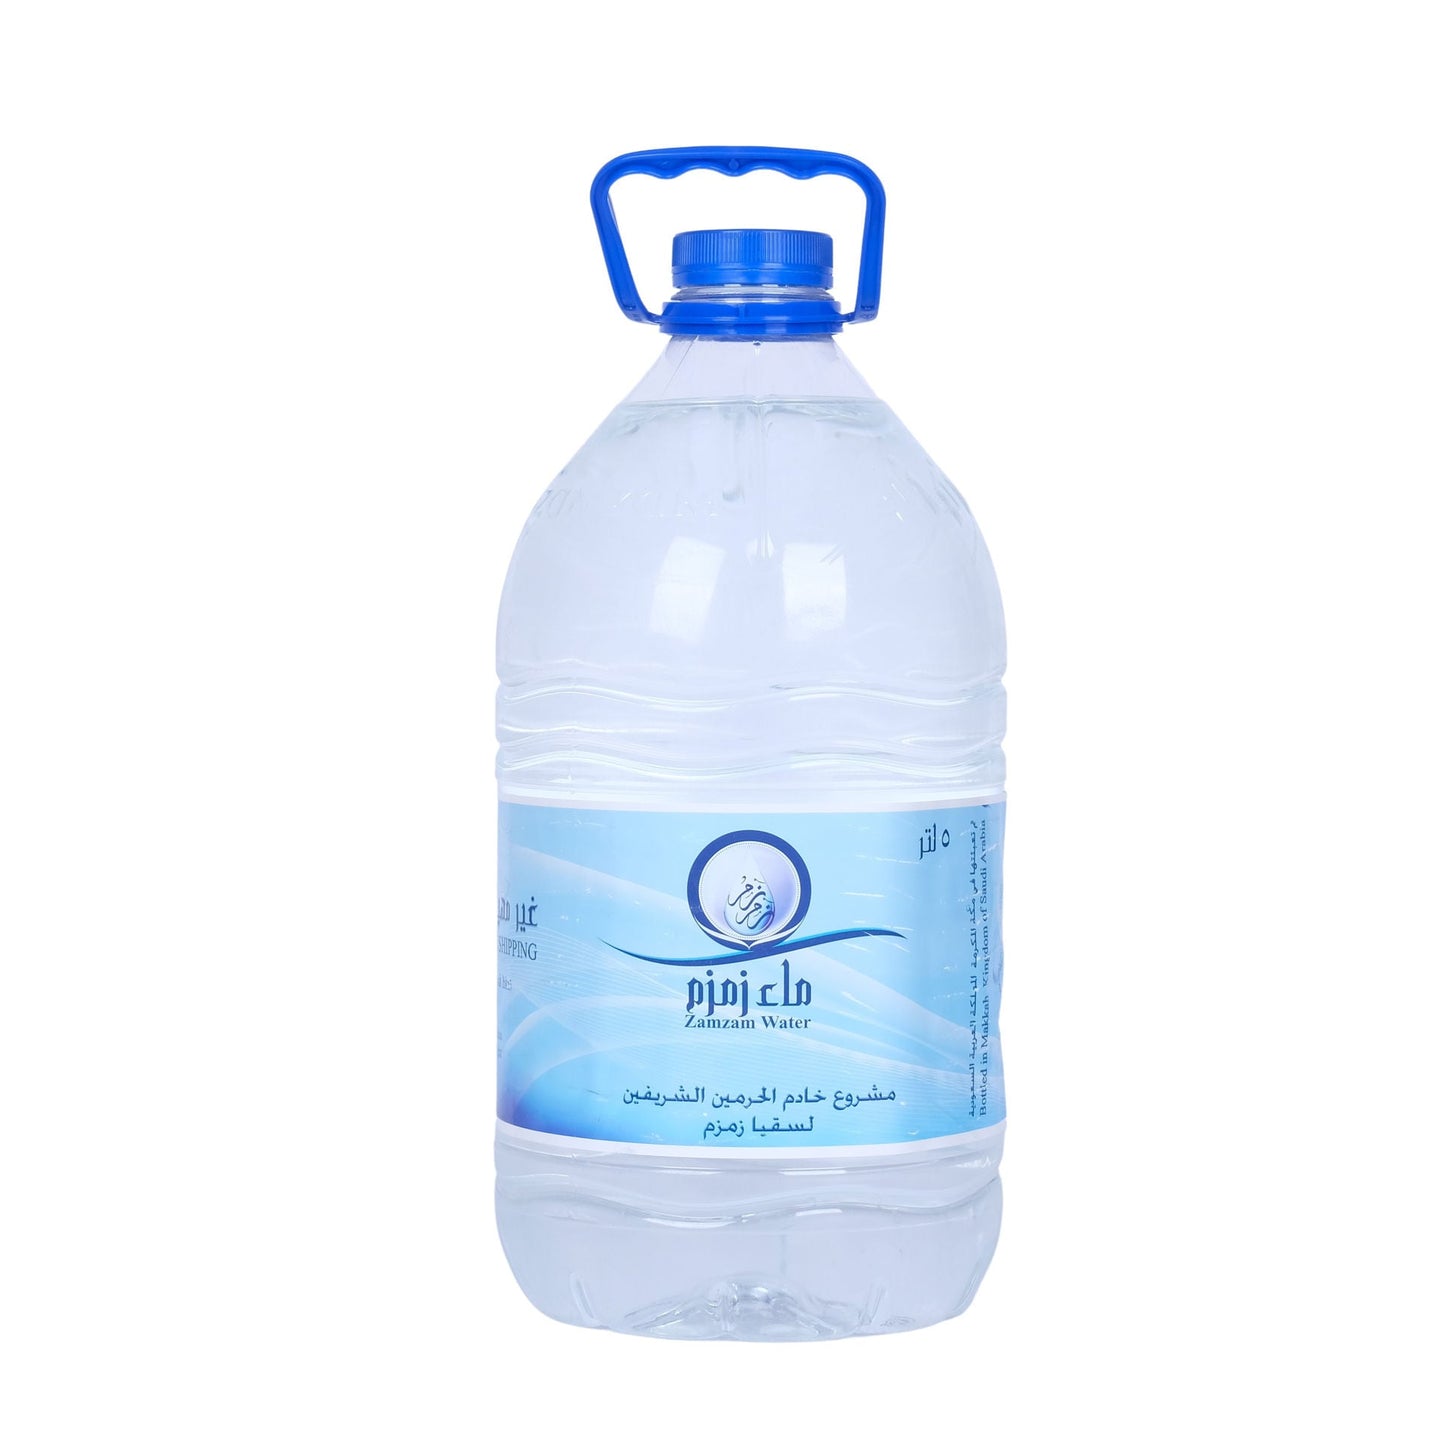 ZamZam Water 5L | ماء زمزم ٥ لتر